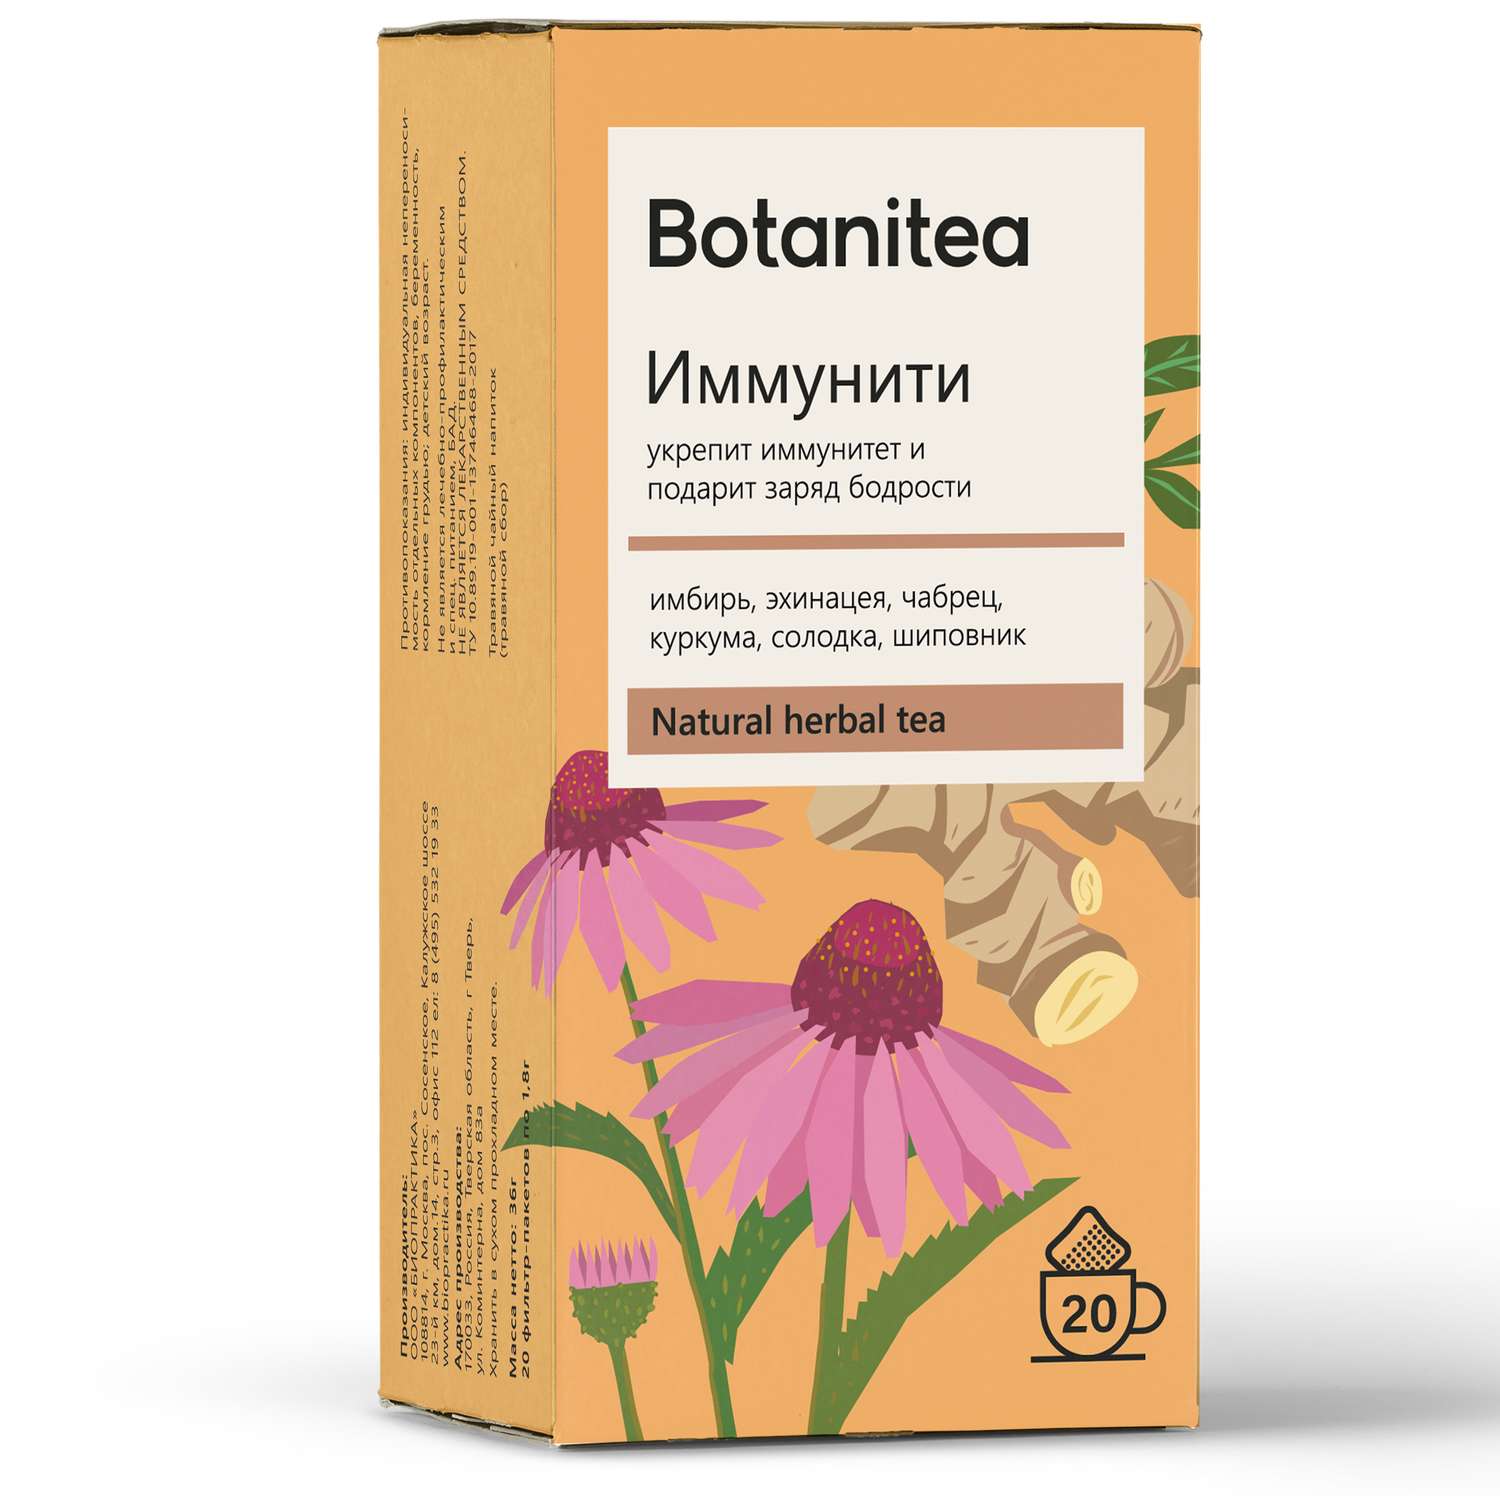 Botanitea. Biopractika чай. Эхинацея и тимьян. Травяной чай Биопрактика Biopractika botanitea сон. Botanitea крепкий сон.